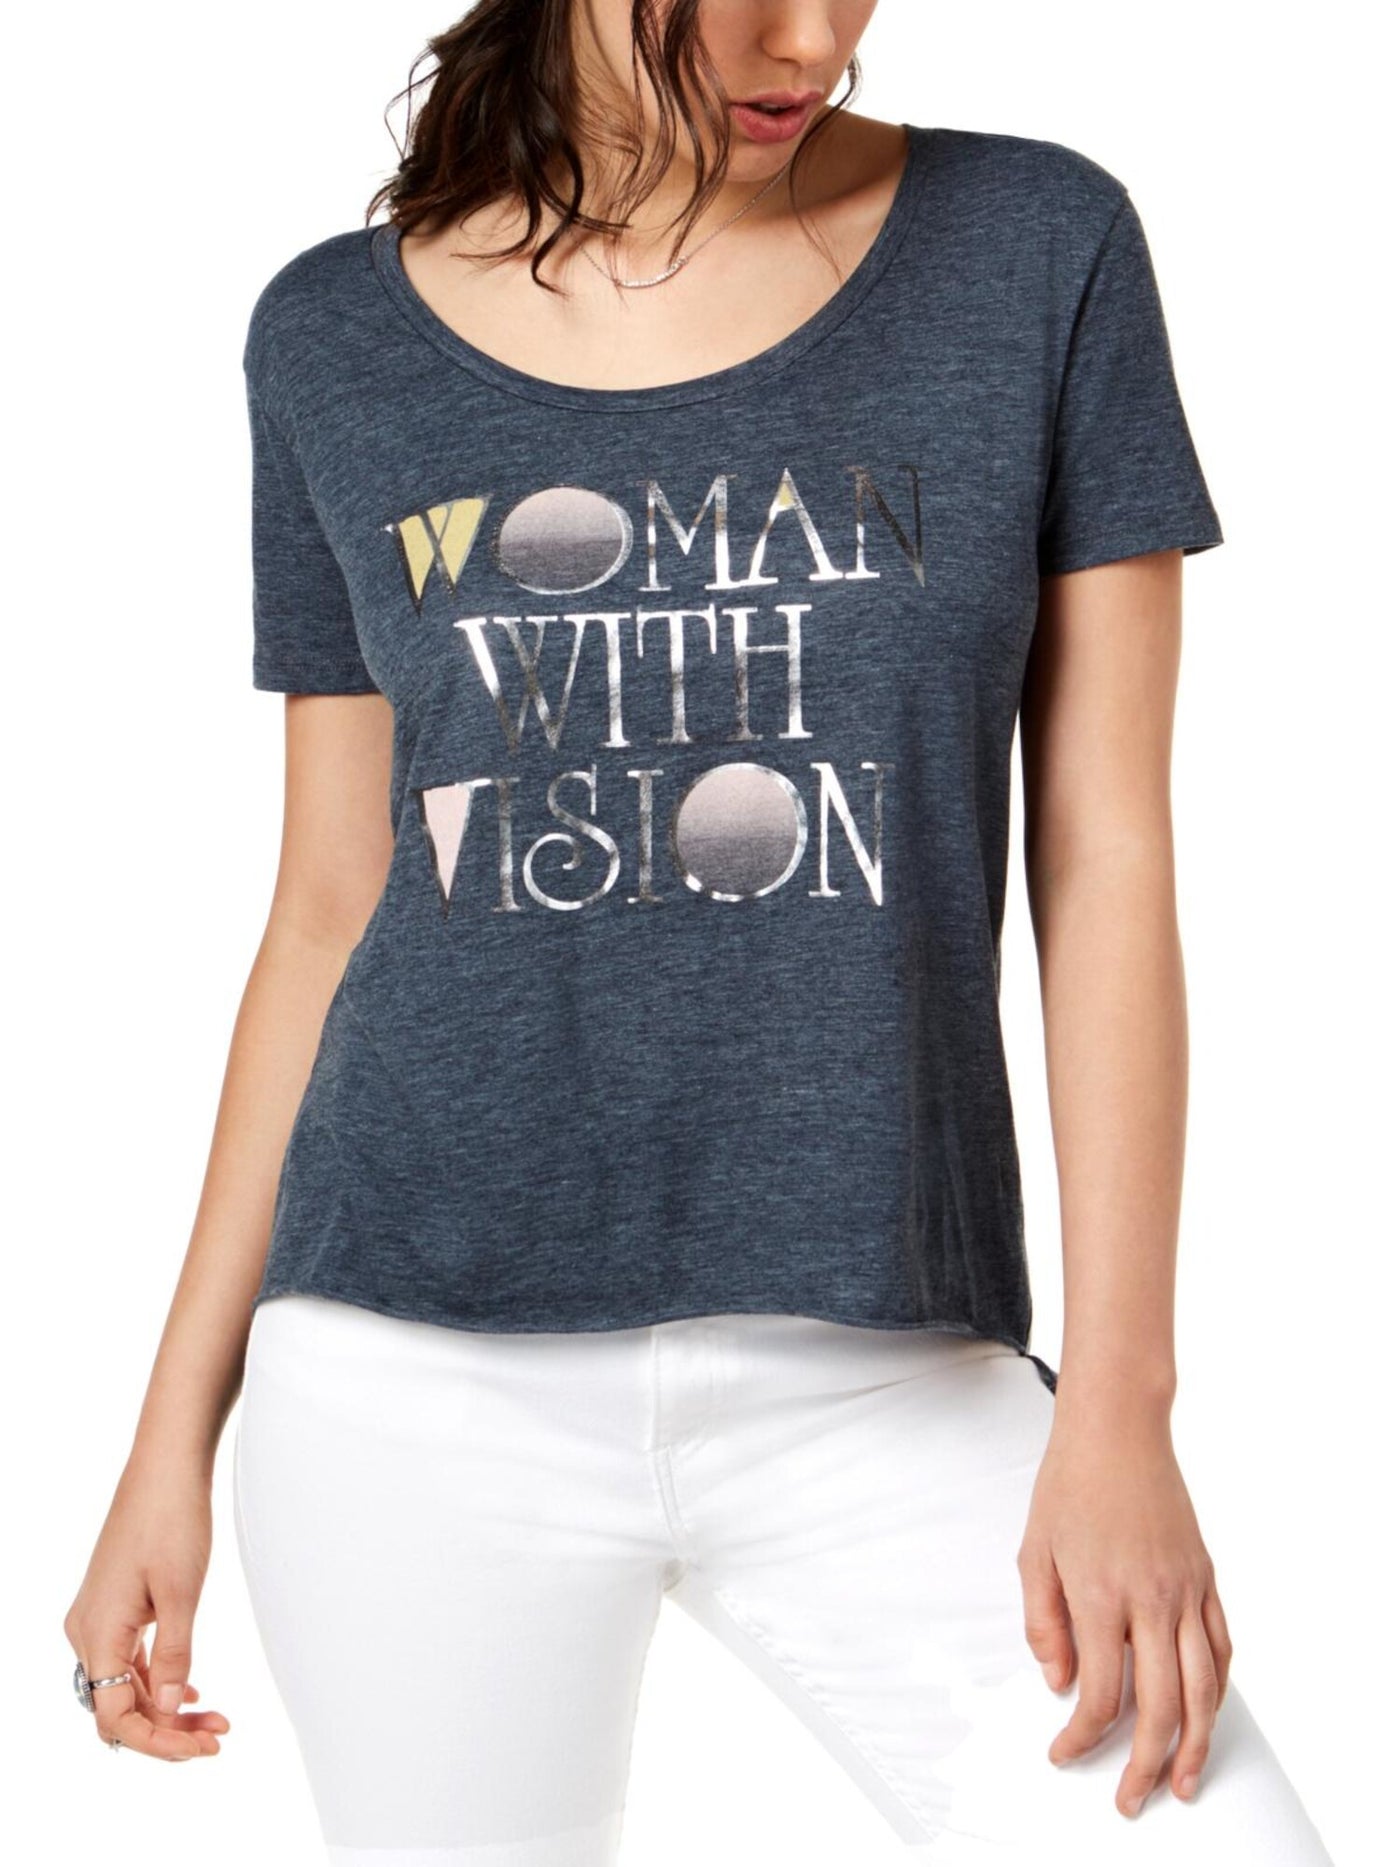 TRUE VINTAGE Womens Gray Printed Short Sleeve Scoop Neck T-Shirt S